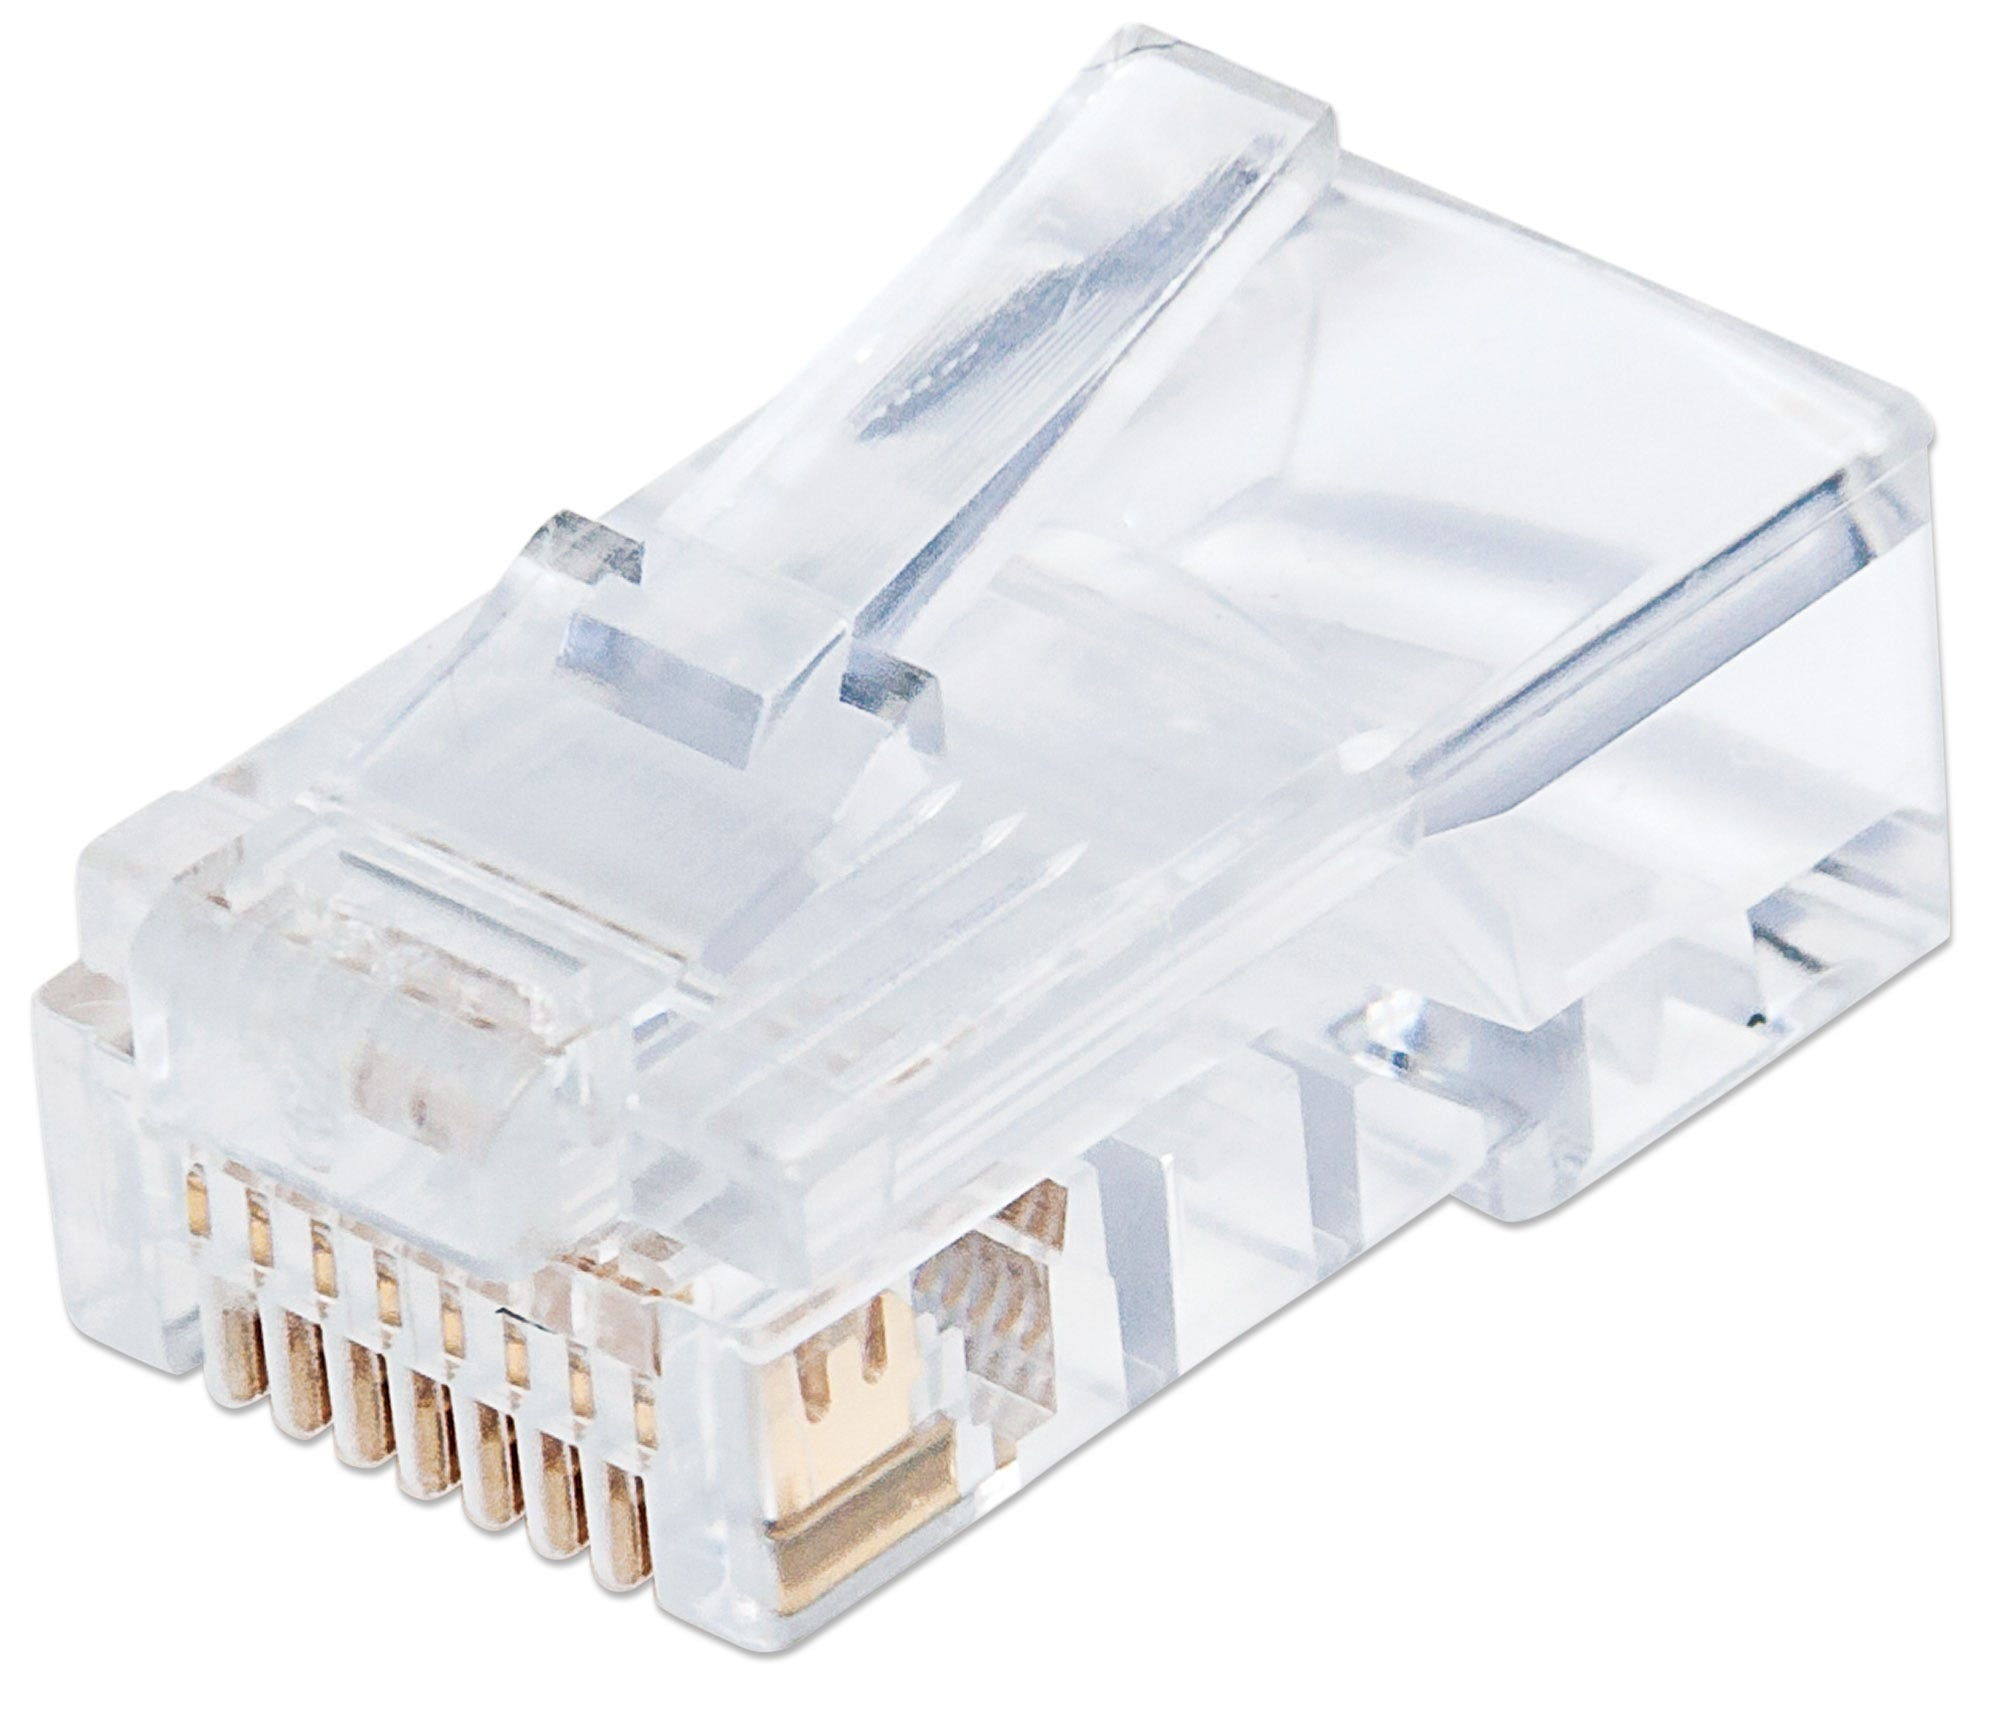 Intellinet 100er-Pack Cat5e RJ45-Modularstecker Pro Line, UTP, 3-Punkt-Aderkontaktierung, für Massivdraht, 100 Stecker im Becher, 50 µ vergoldete Kontakte - Netzwerkanschluss - RJ-45 (M)